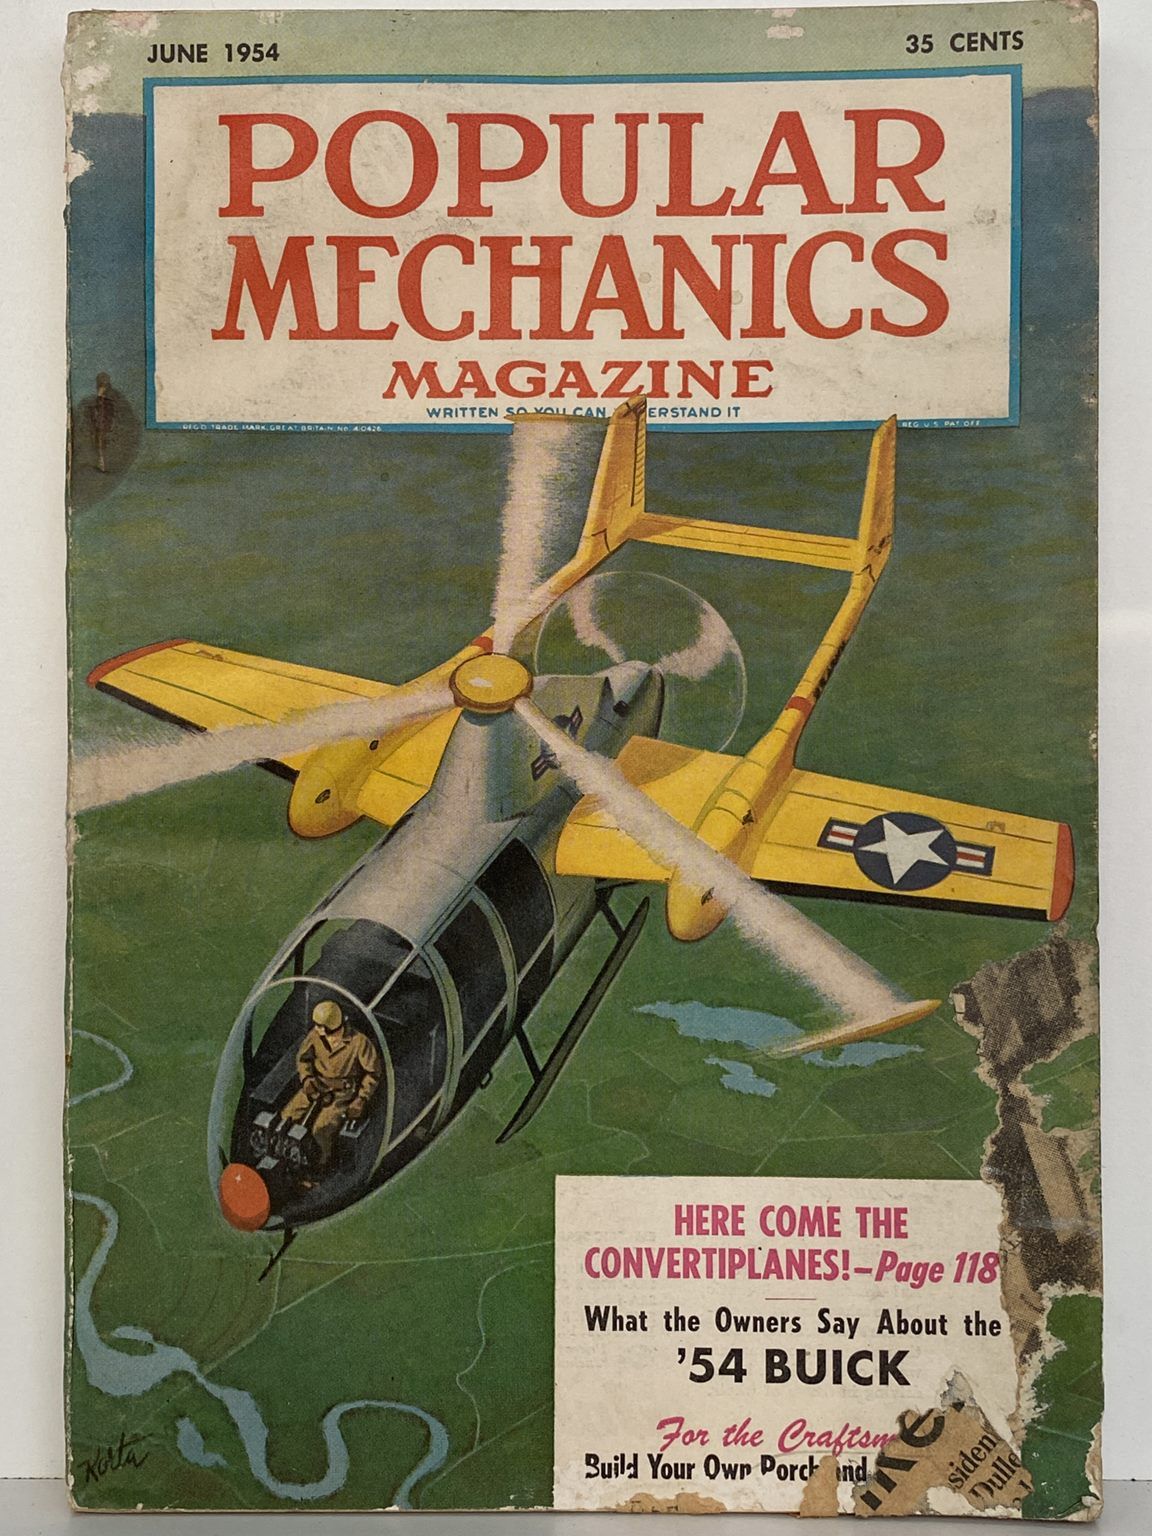 VINTAGE MAGAZINE: Popular Mechanics - Vol. 101, No. 6 - June 1954